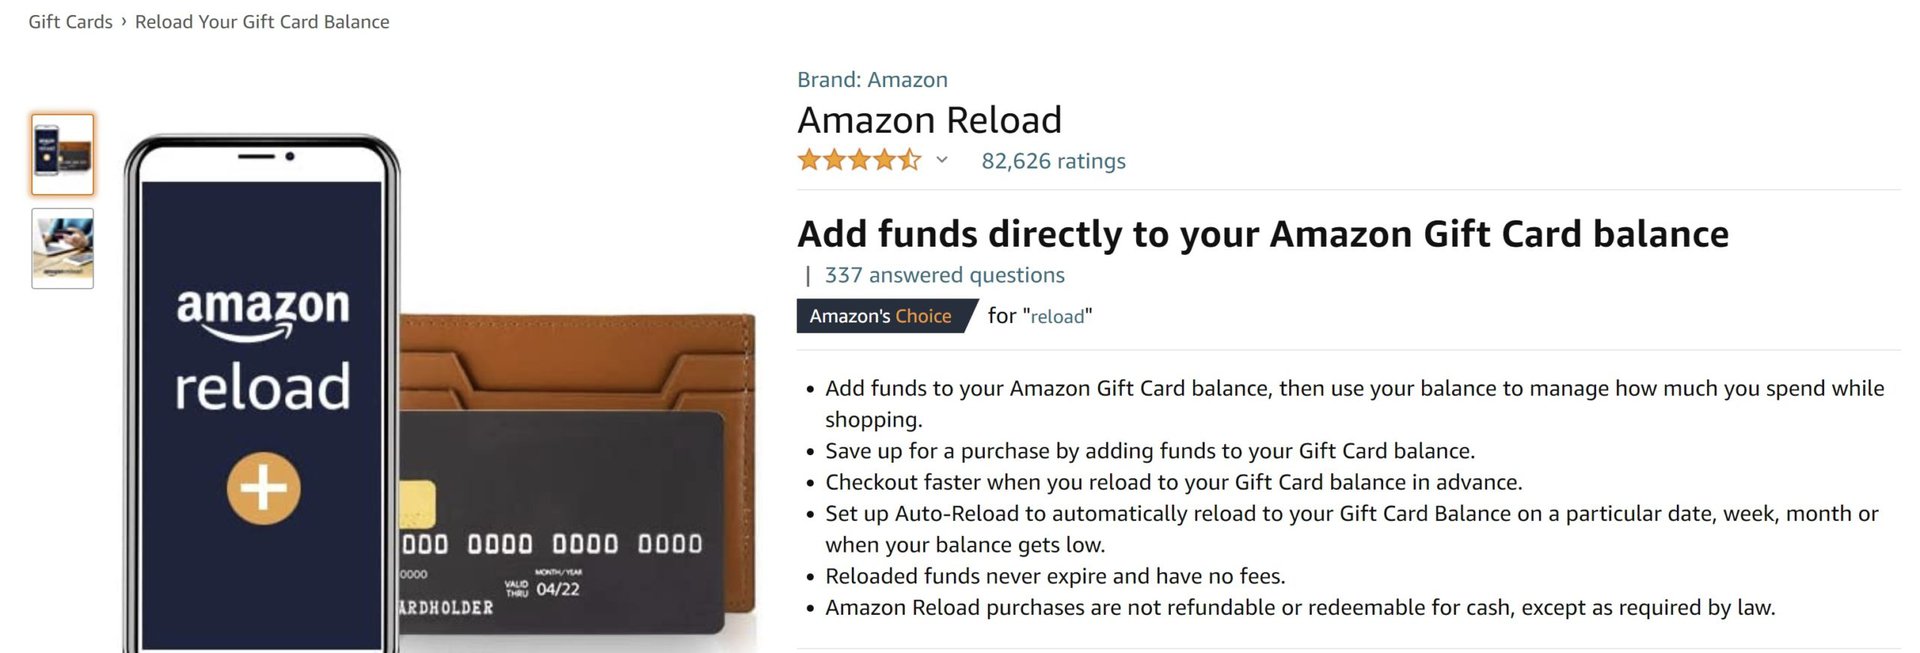 amazon reload gift card balance